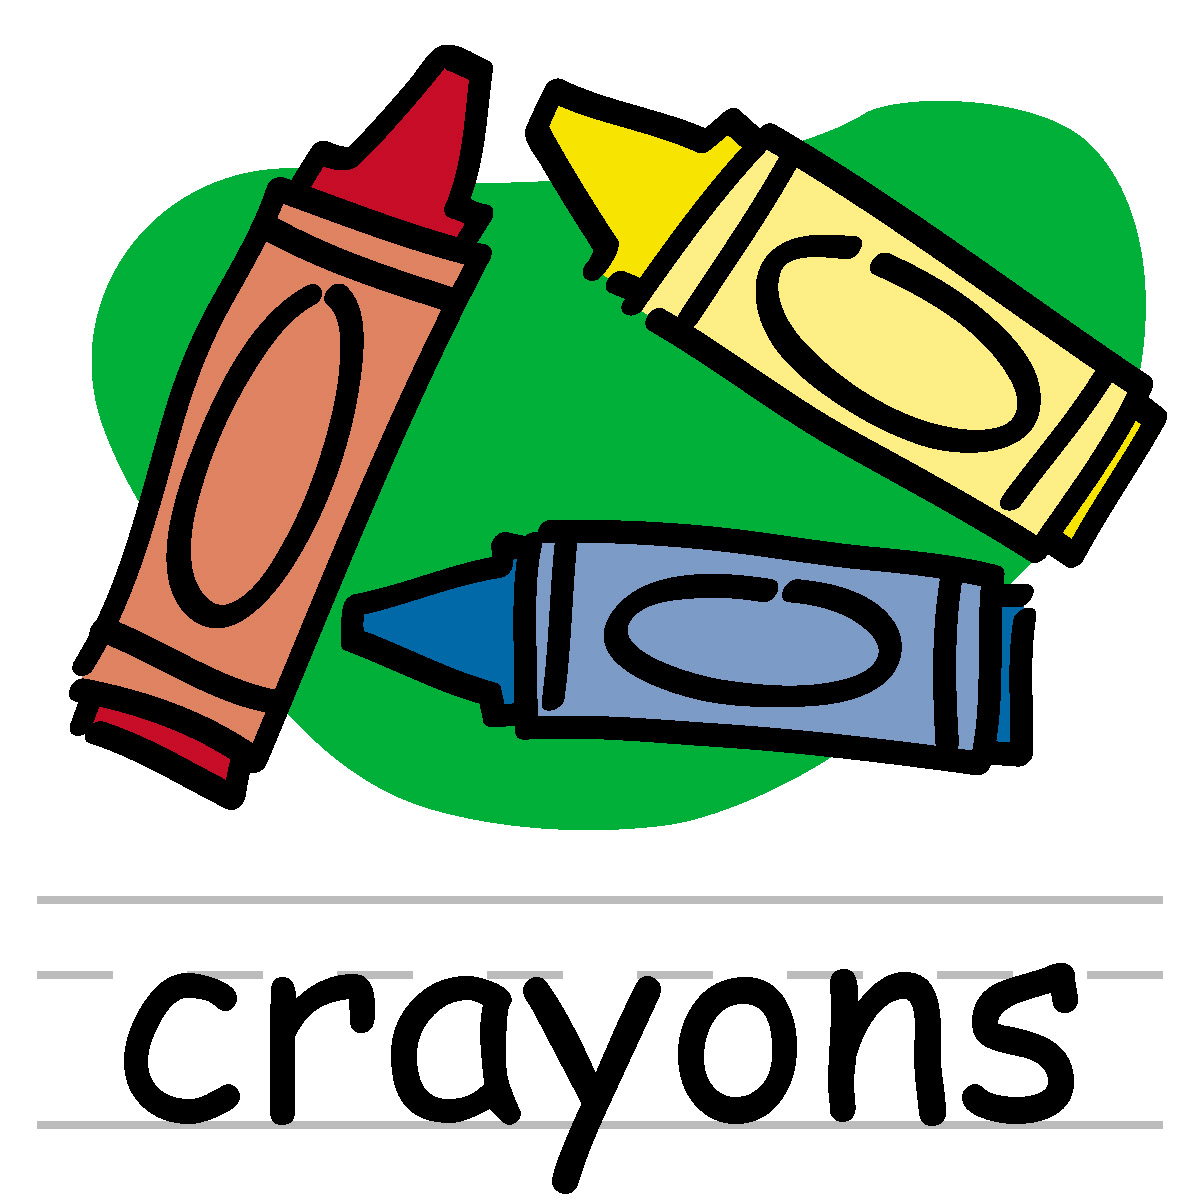 Crayon Box Coloring Page   Clipart Panda   Free Clipart Images